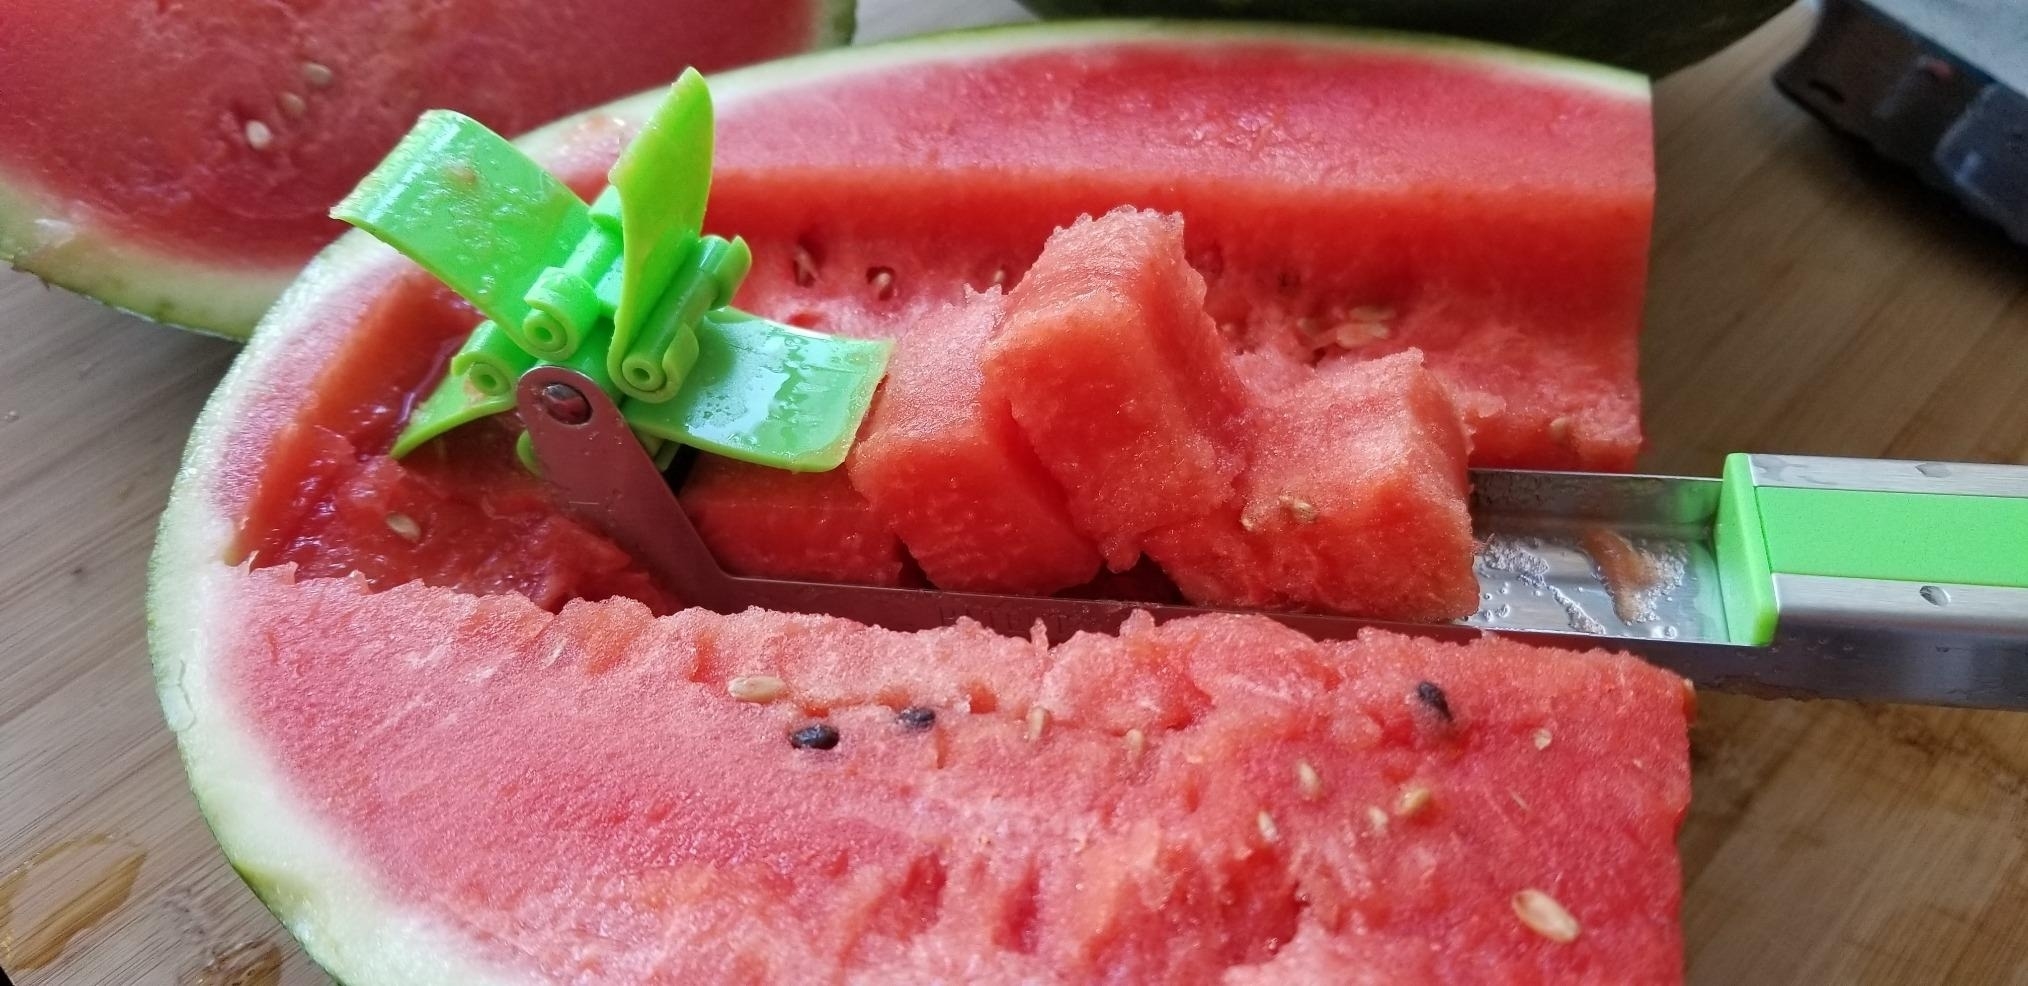 Watermelon slicer cuts watermelon